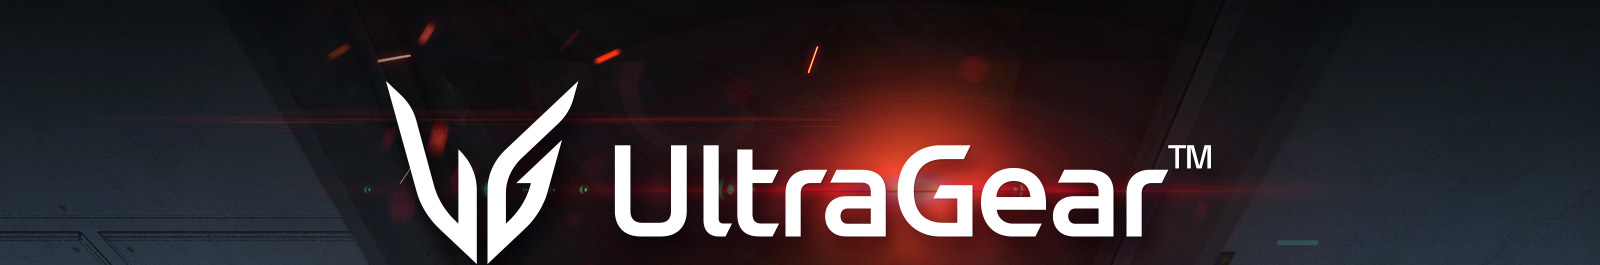 UltraGear™